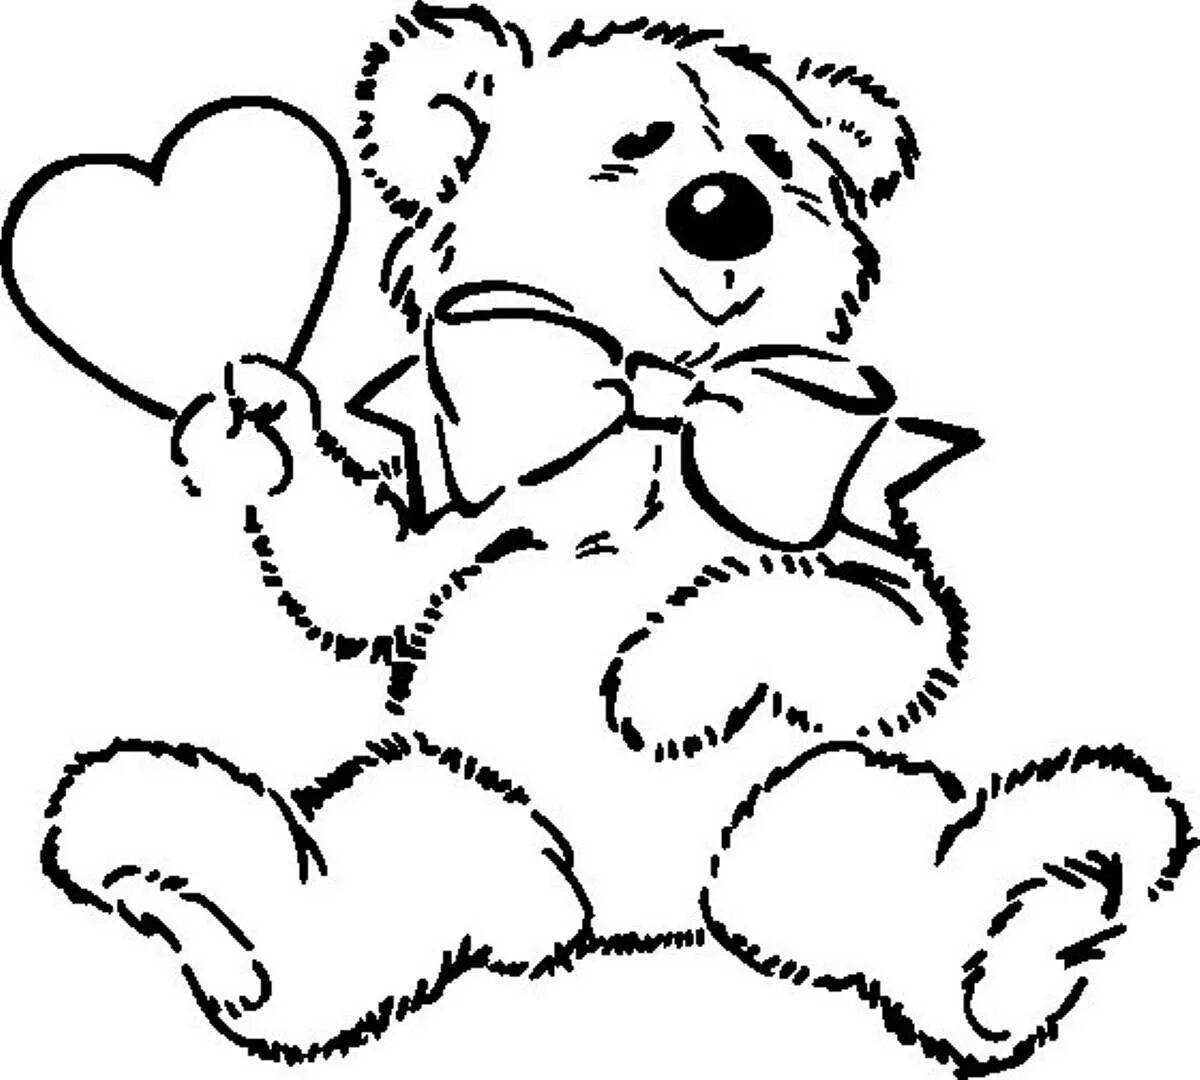 Joyful teddy bear with heart coloring book